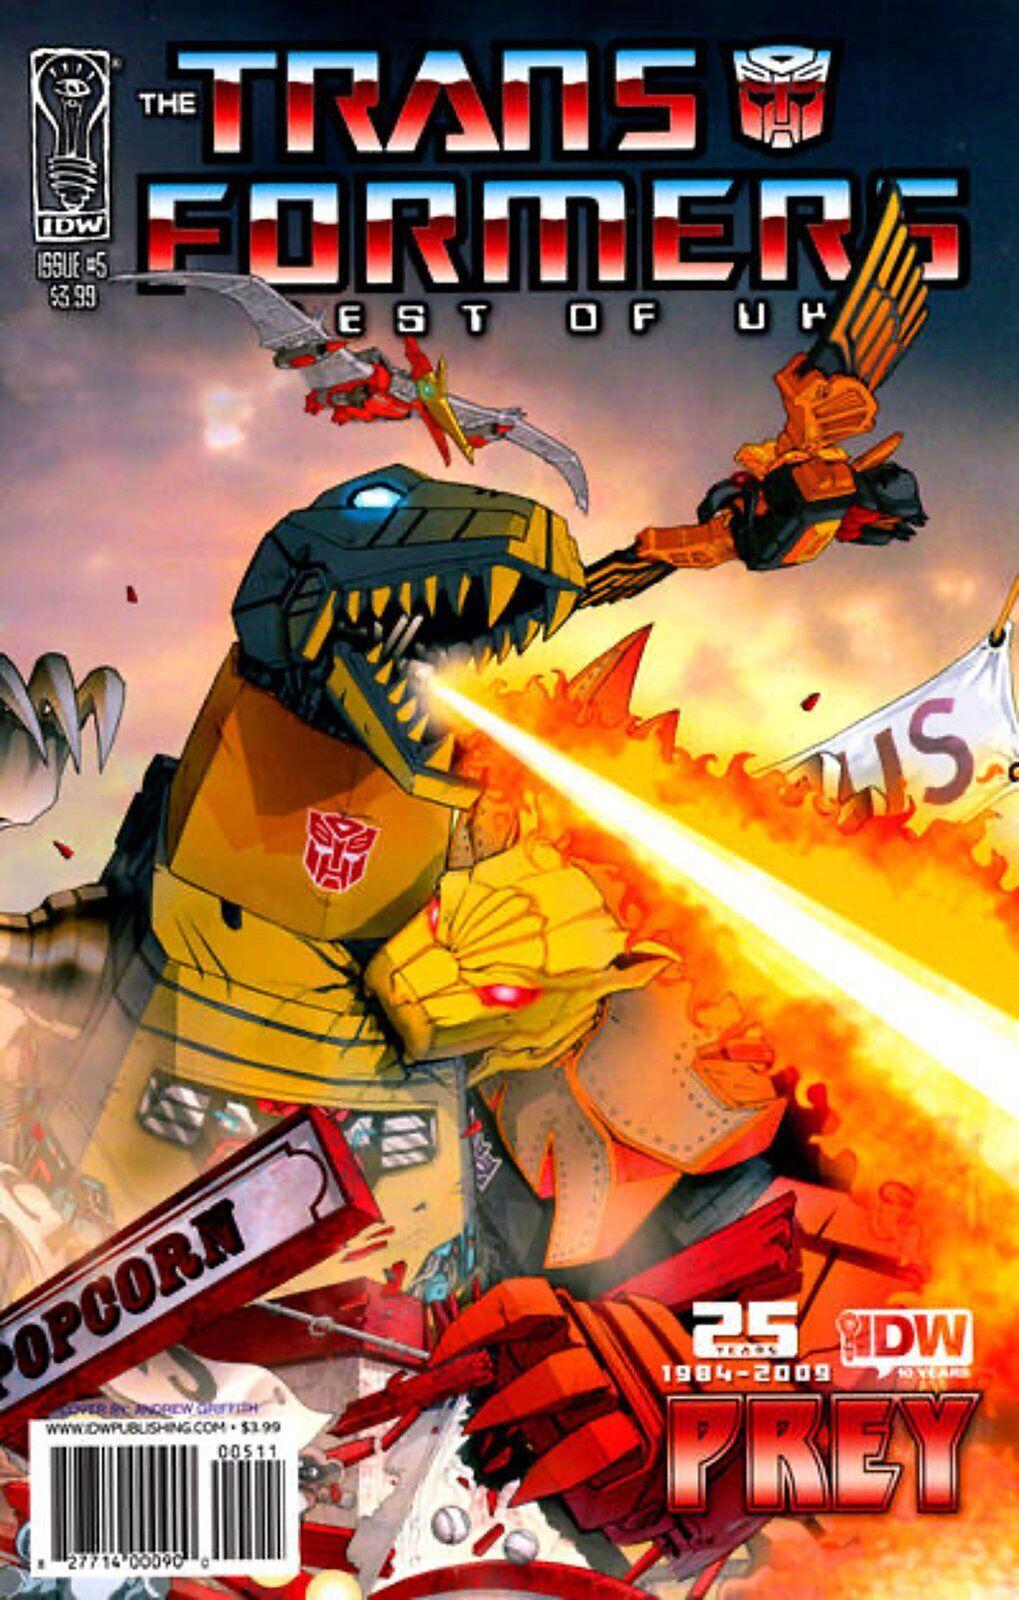 Transformers: Best of UK - Prey #5 (2009) IDW Comics